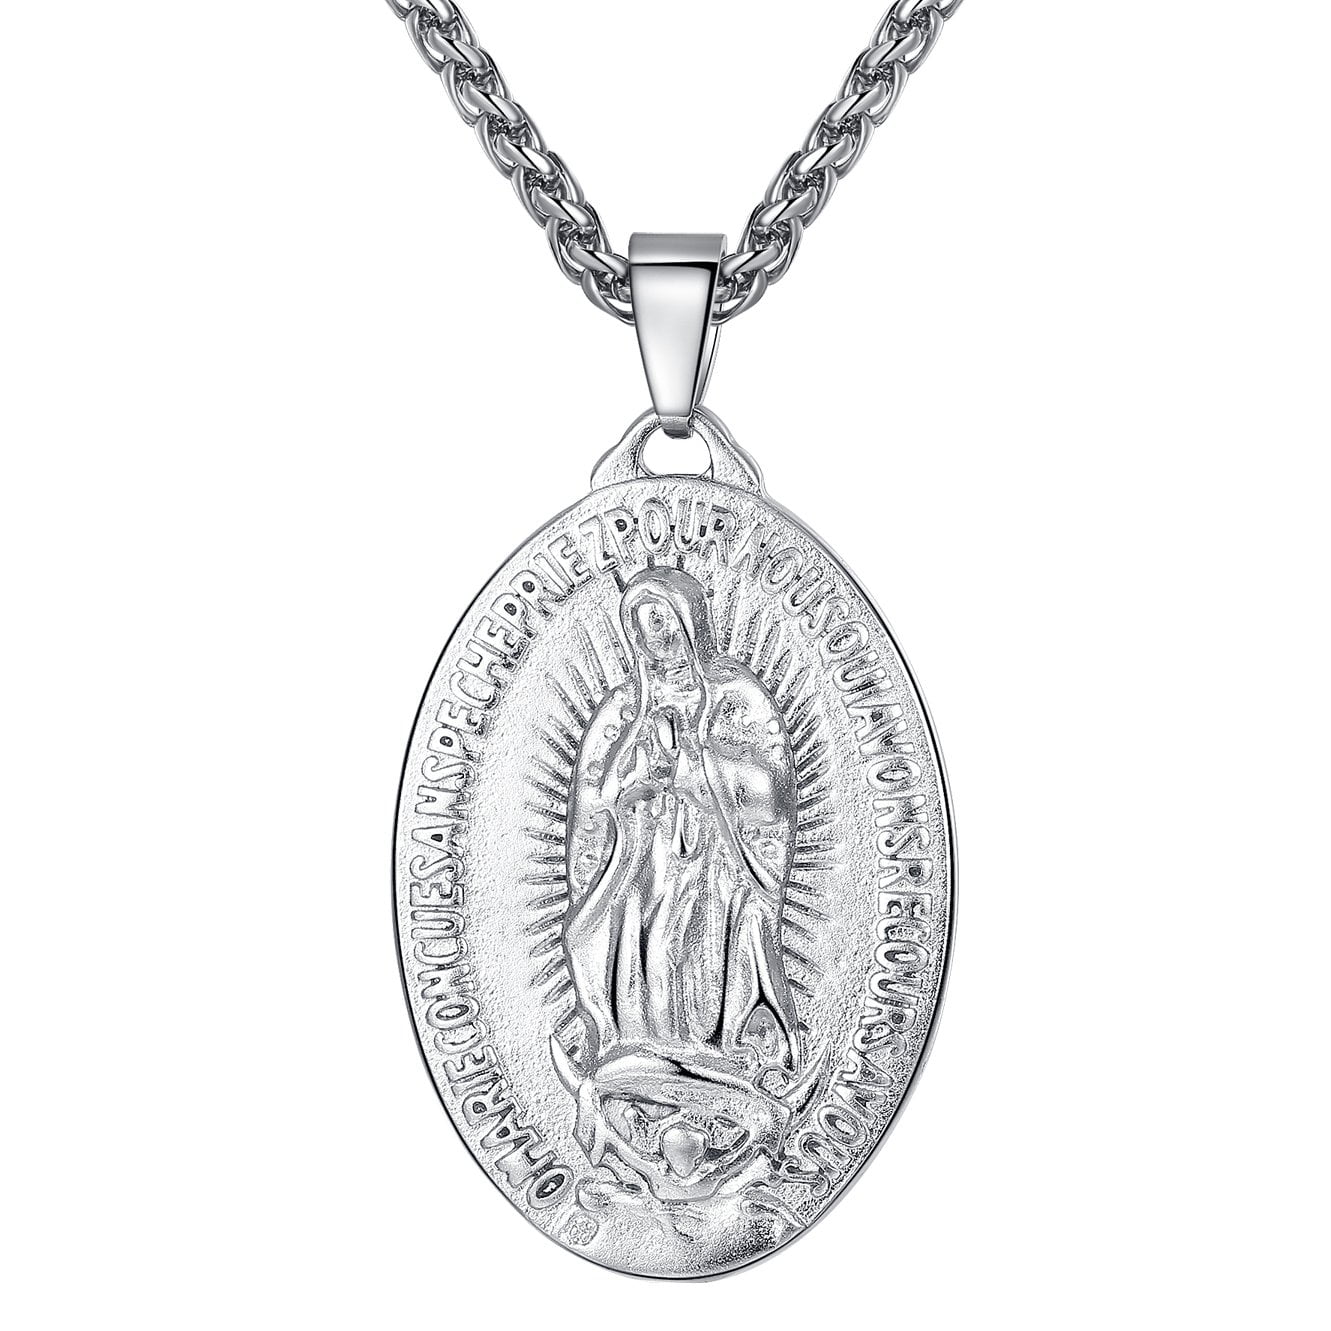 Unisex Stainless Steel Virgin Mary Medallion Pendant Necklace for Men or Women afe42d98 b51d 4e68 a7d4 f61d24a6e57c.218fa075fd8bafbf271a867e6bee52de